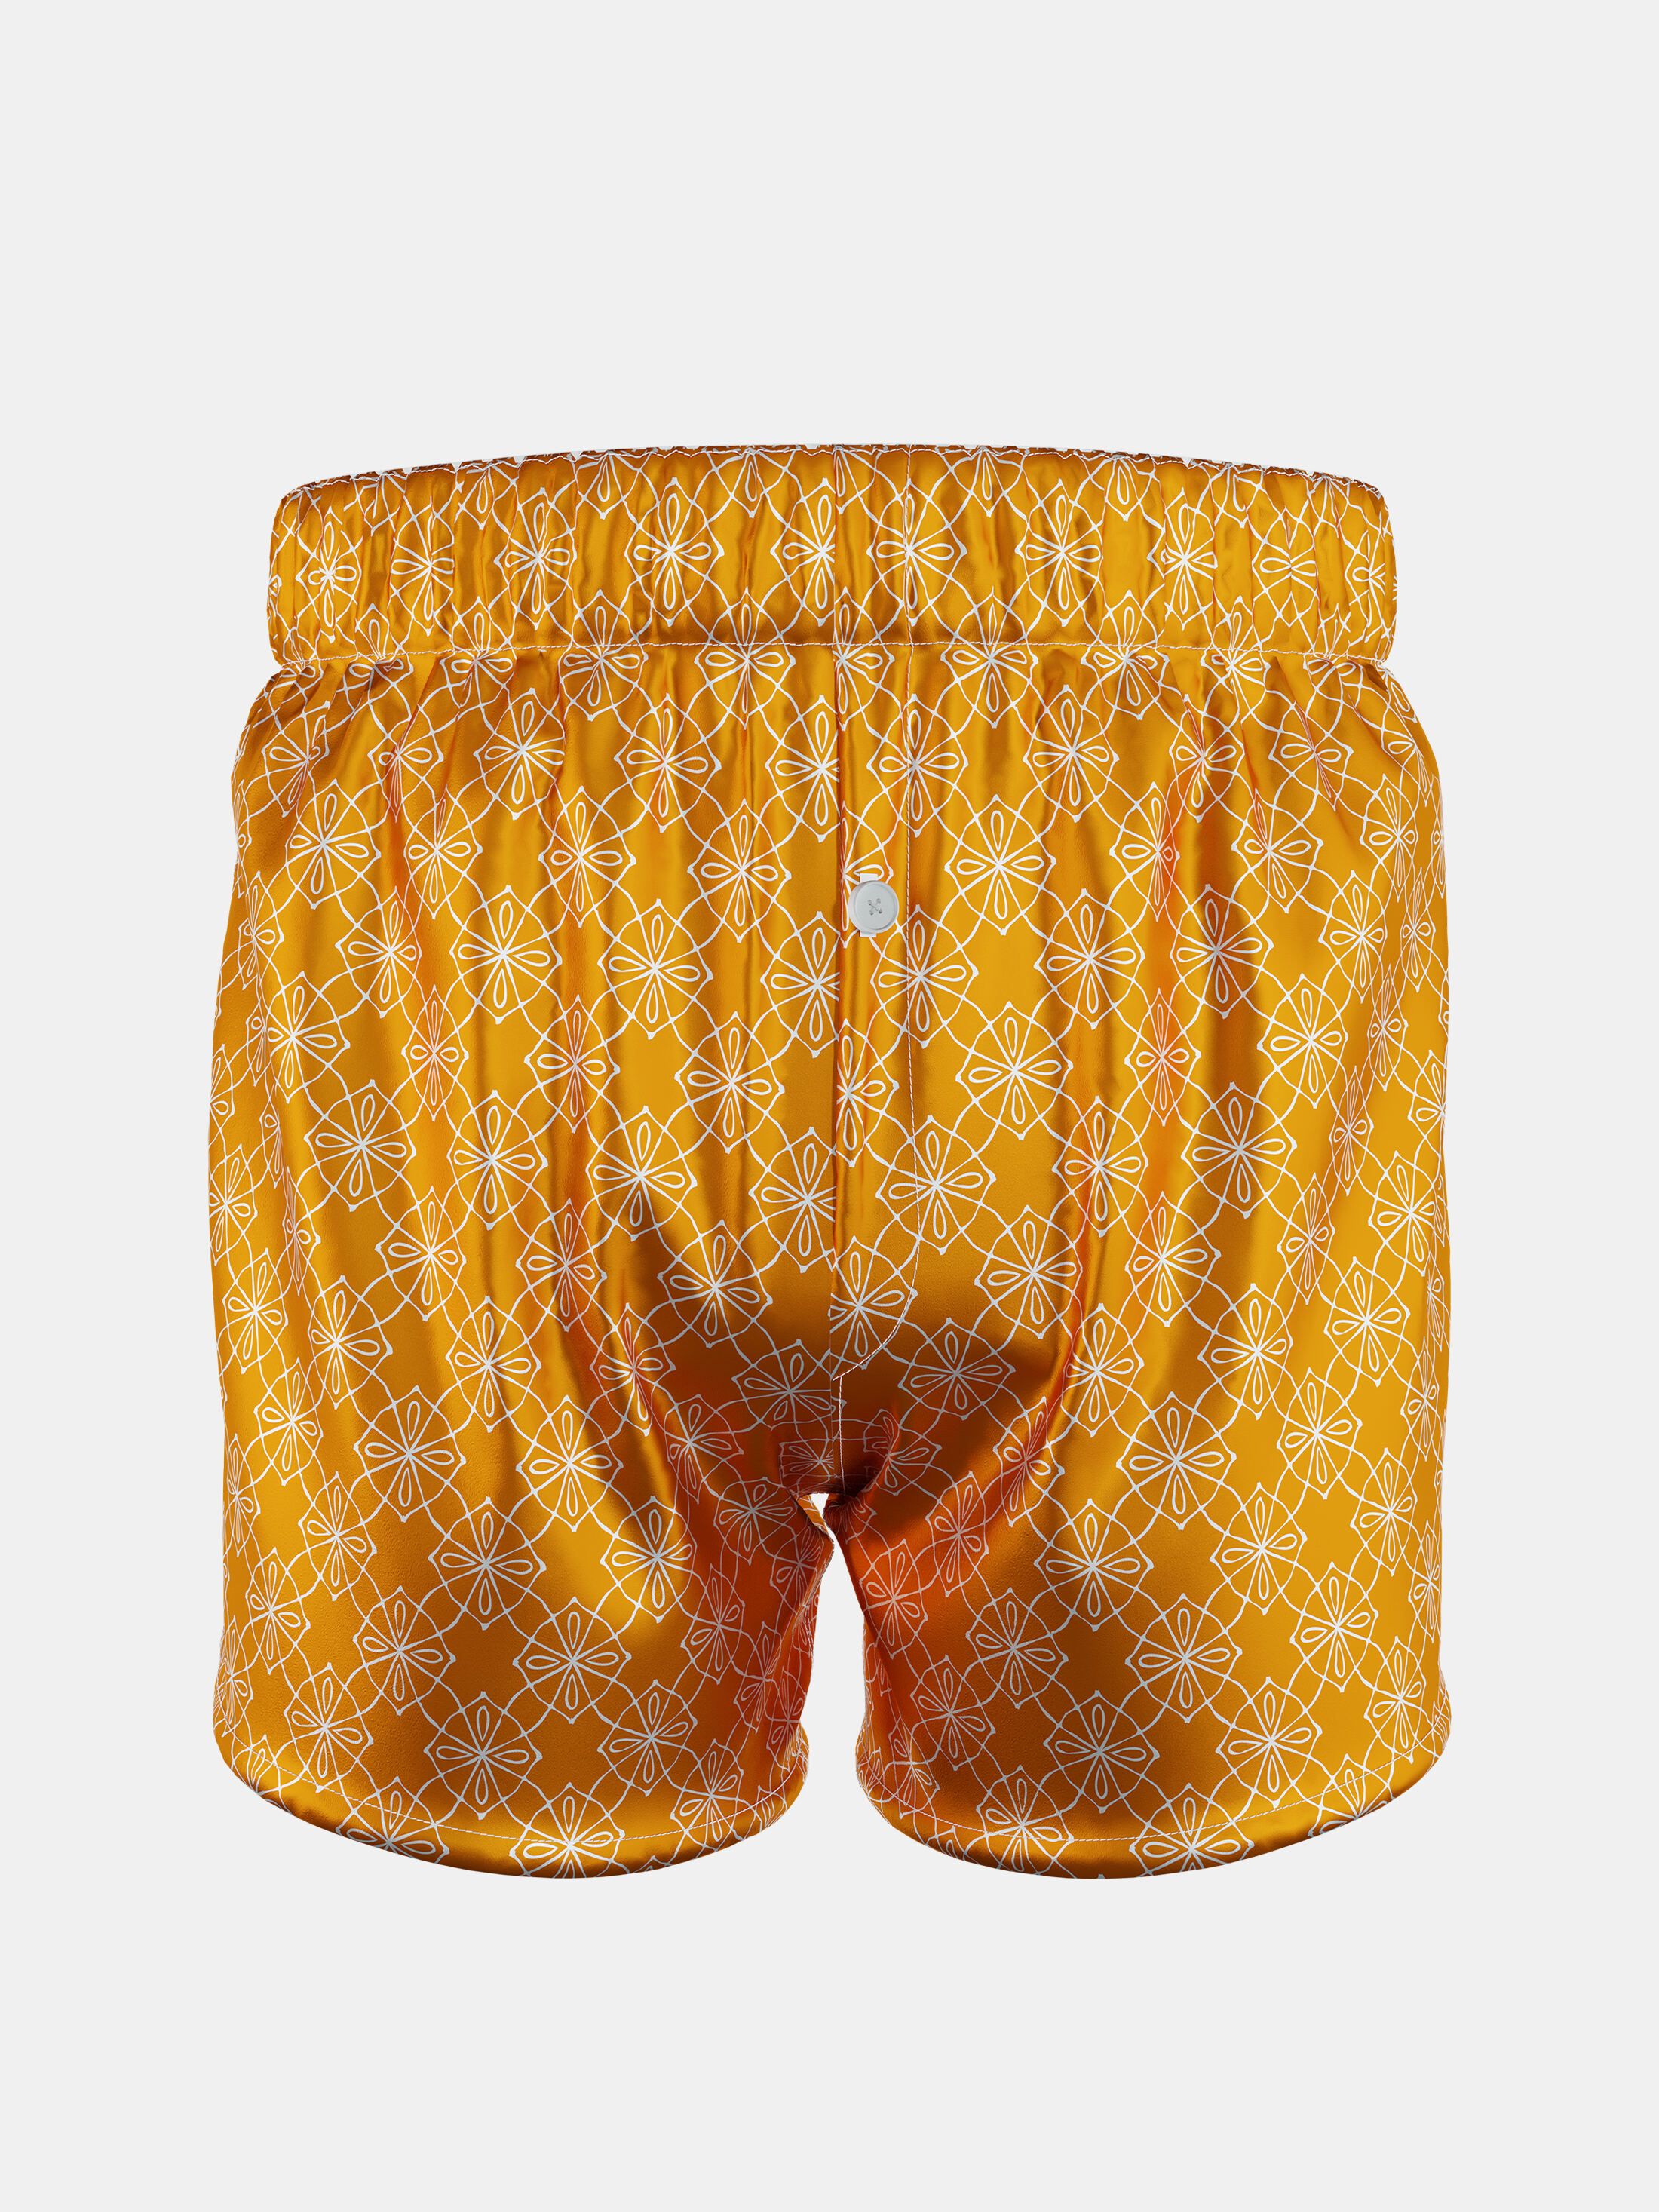 men's custom boxer shorts nz